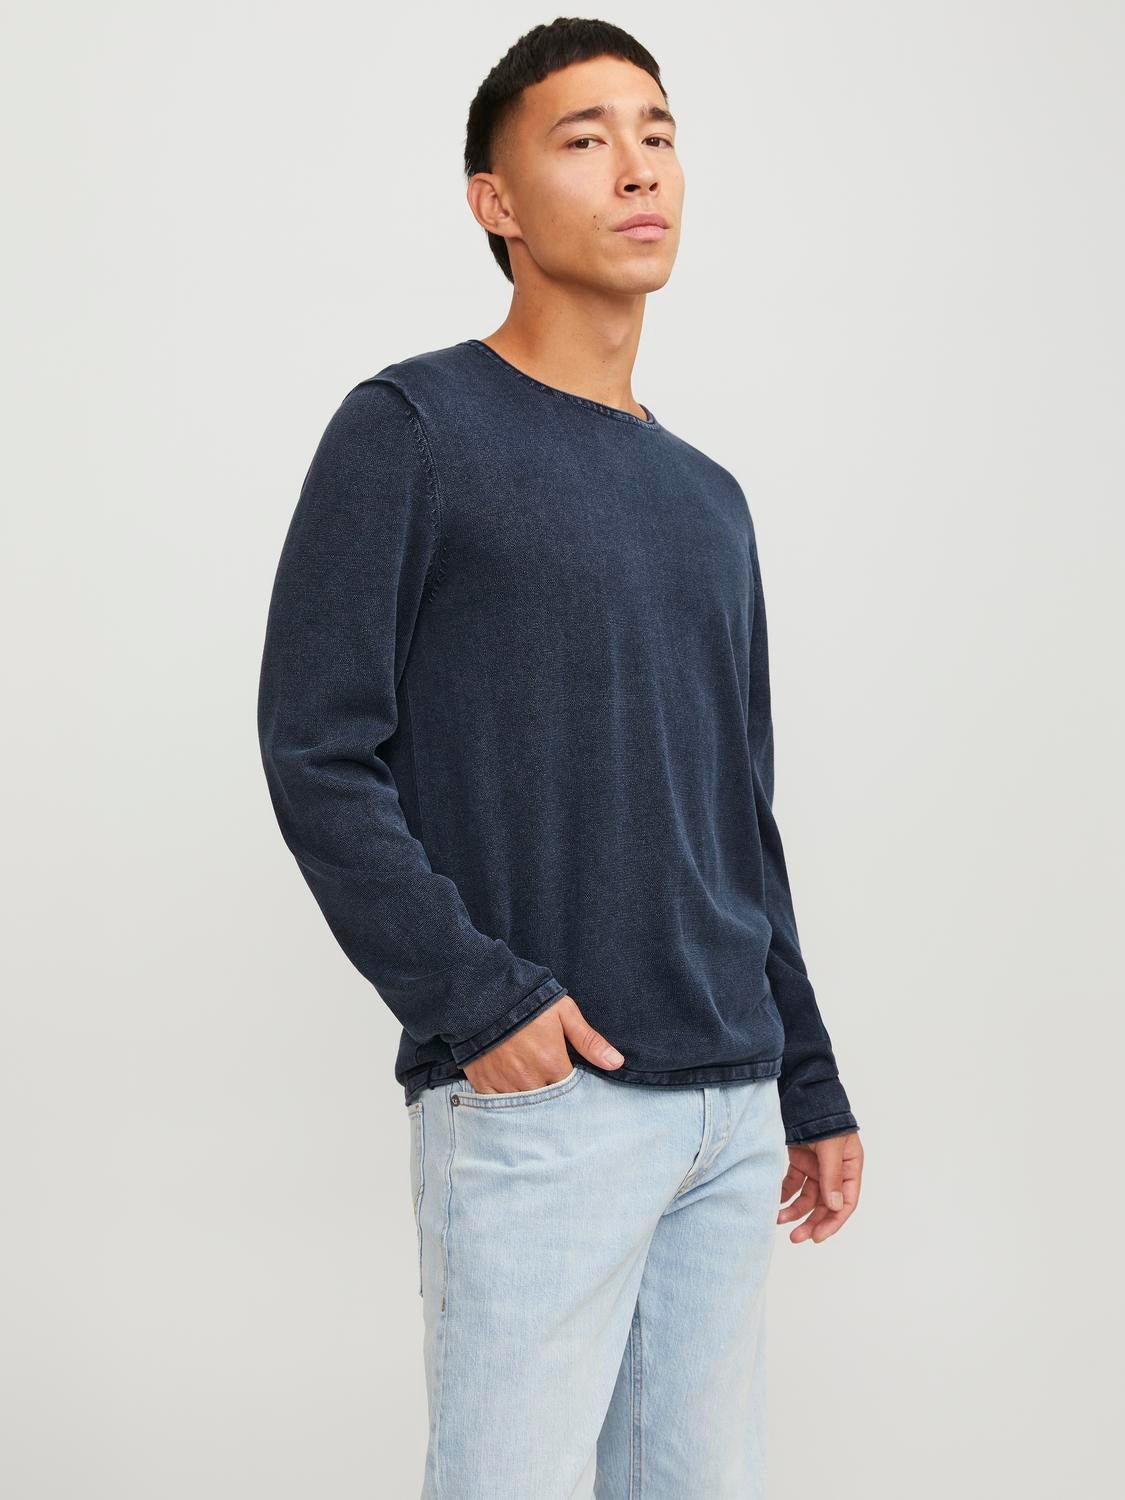 Massimo Dutti jumper Gray M MEN FASHION Jumpers & Sweatshirts Knitted discount 80% 